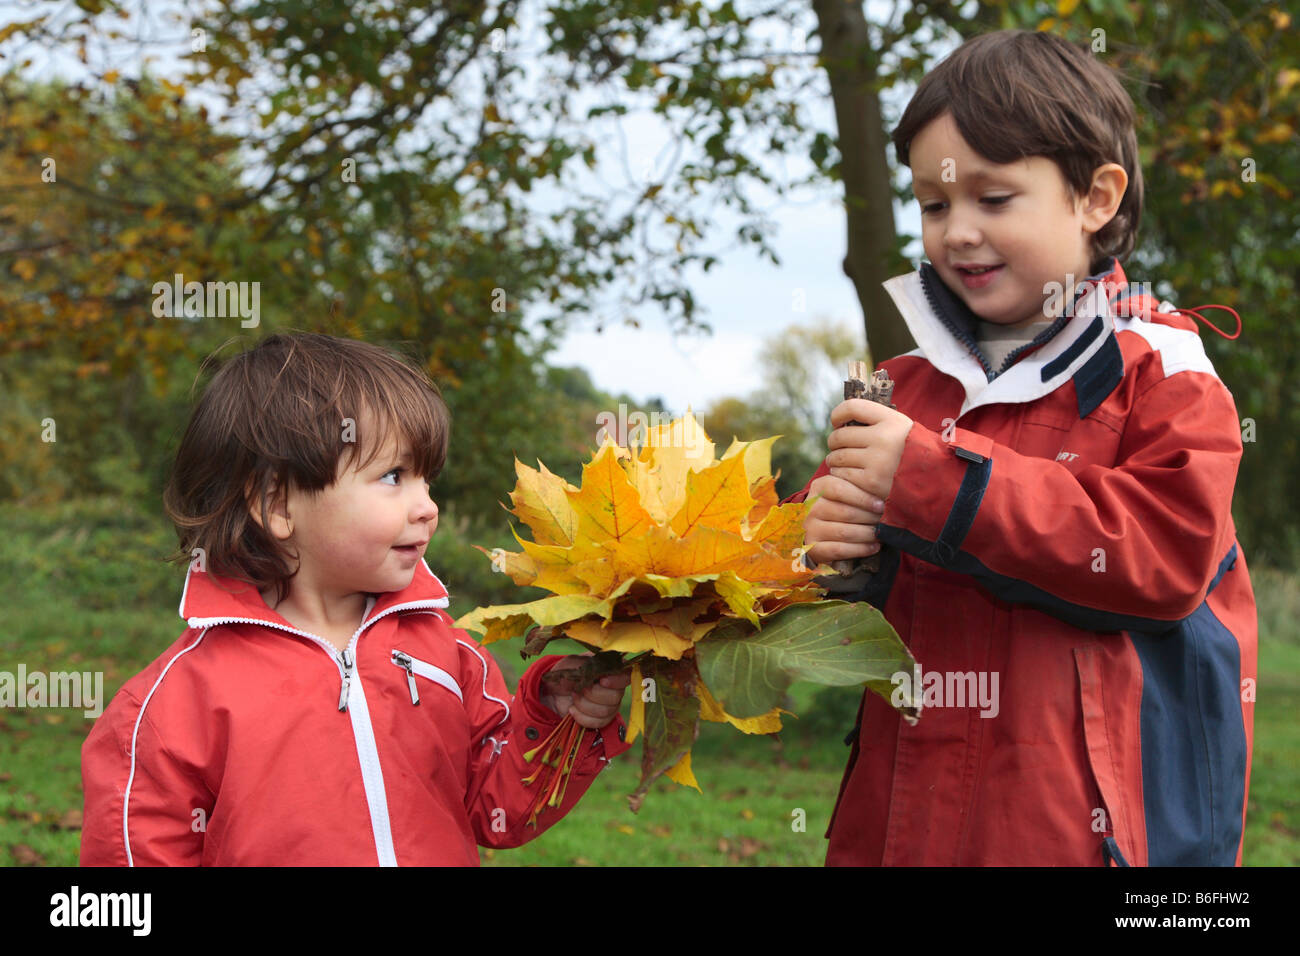 Children gathering autumn leaves, Niederwerth, Rhineland-Palatinate, Germany, Europe Stock Photo